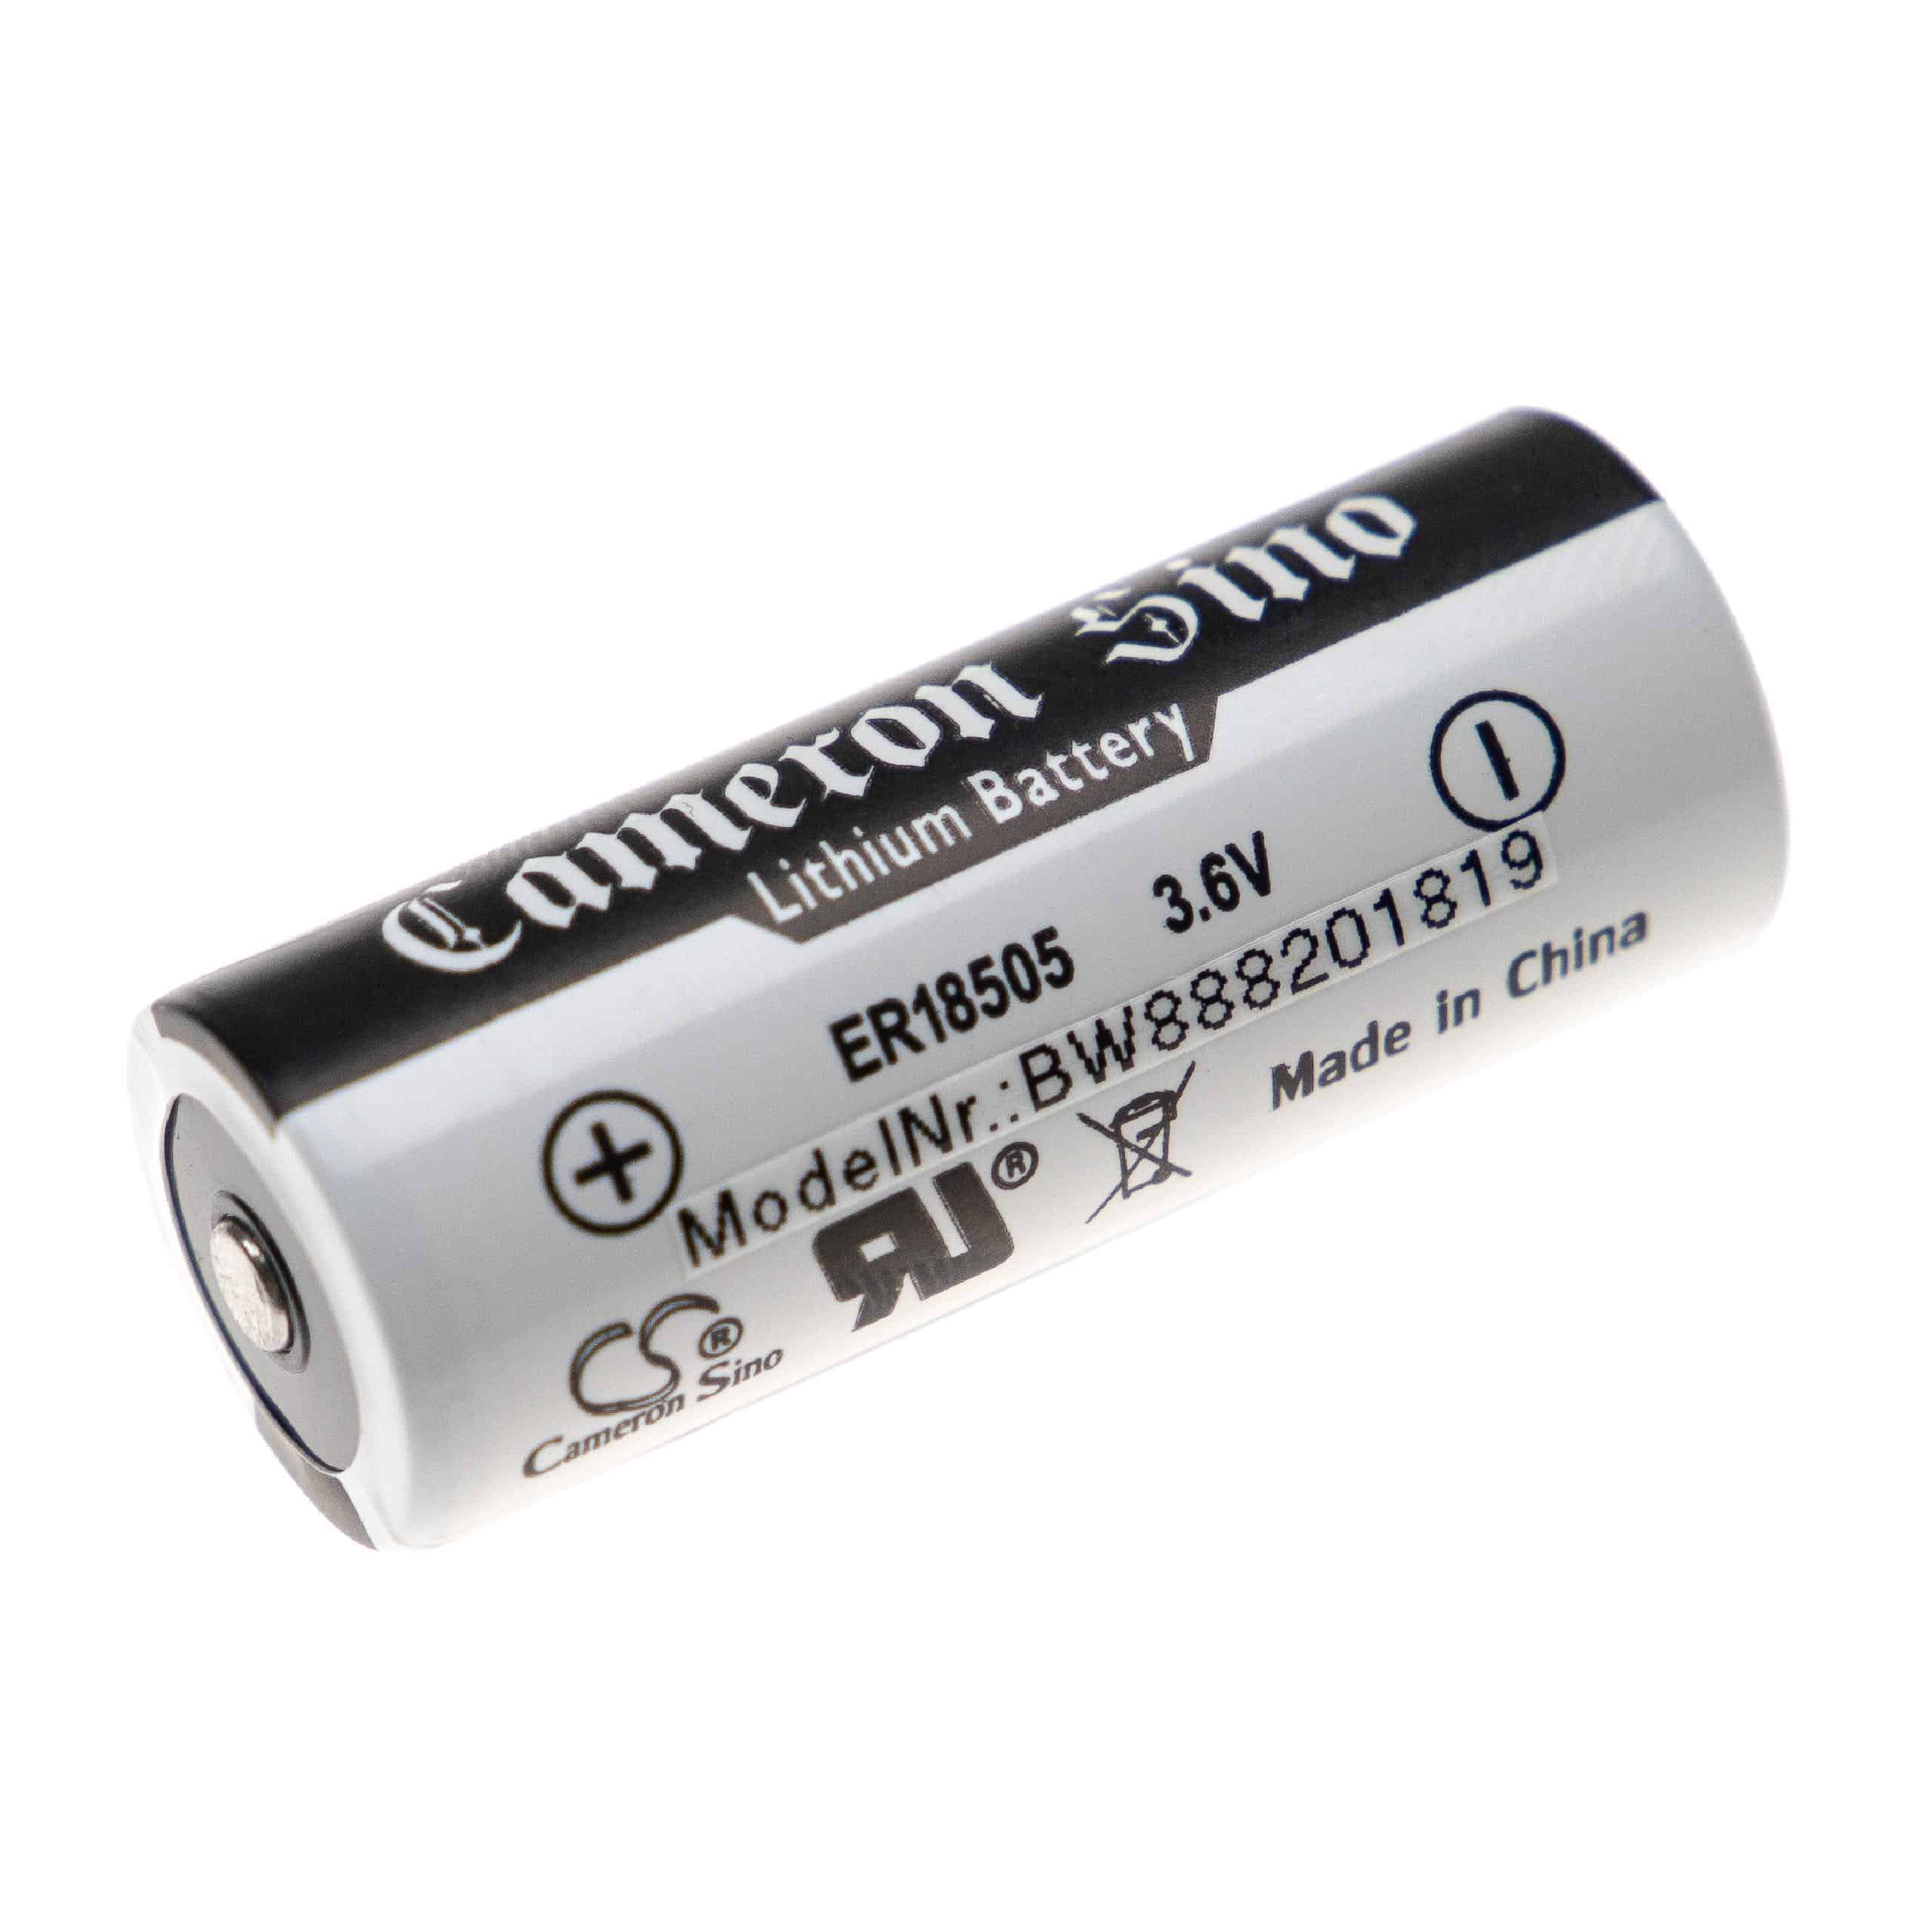 ER18505 Battery Replacement for Lithonia ER18505, A - 4000mAh 3.6V Li-SOCl2